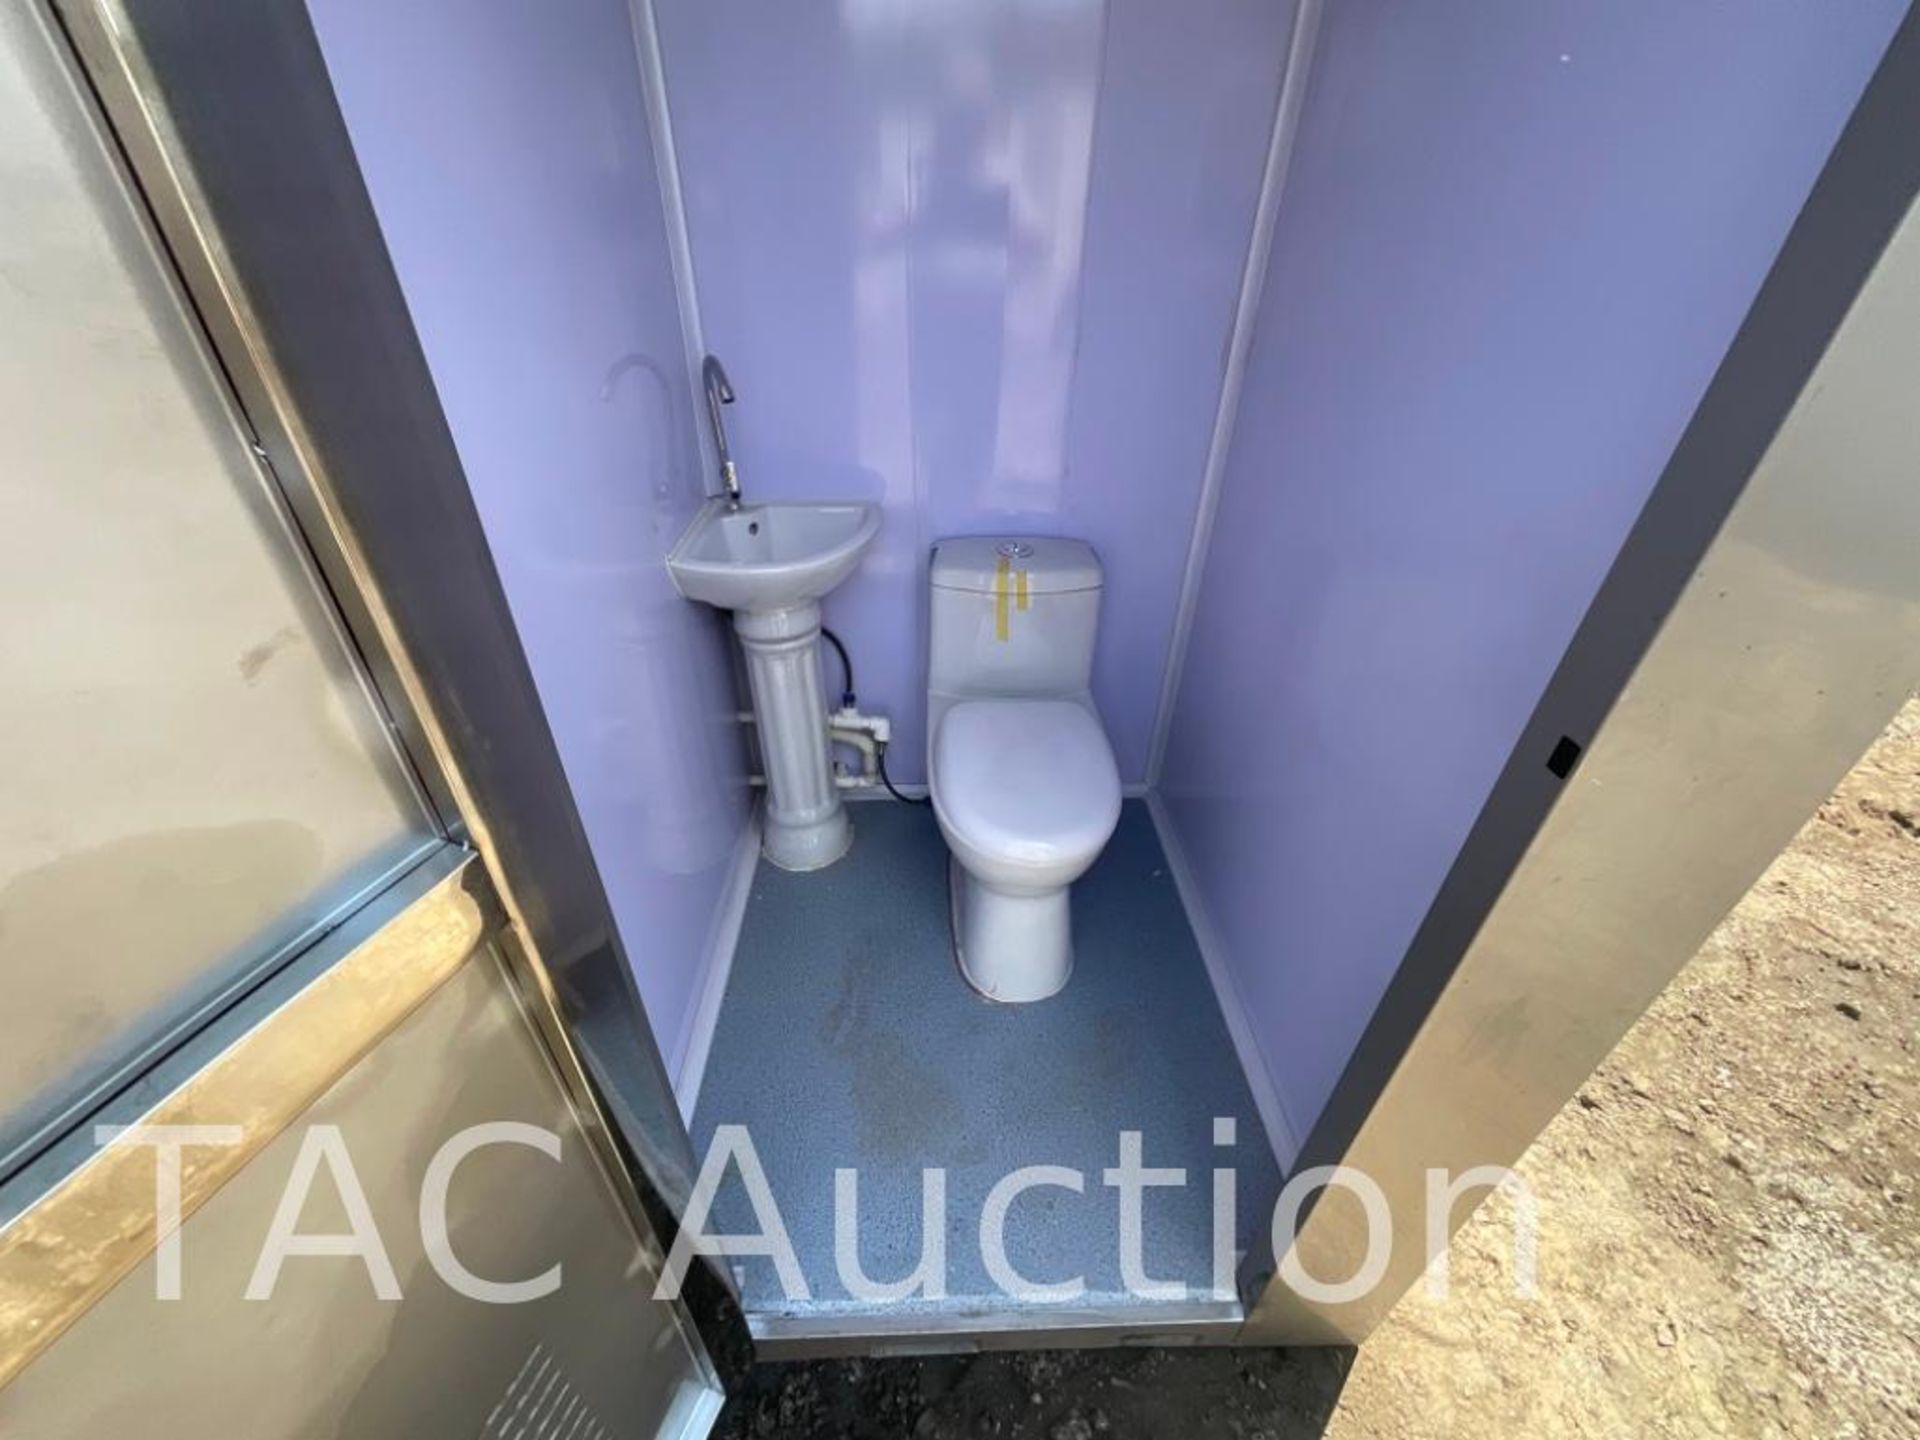 New Double Stall Unisex Porta Potty W/ Sink - Image 9 of 11